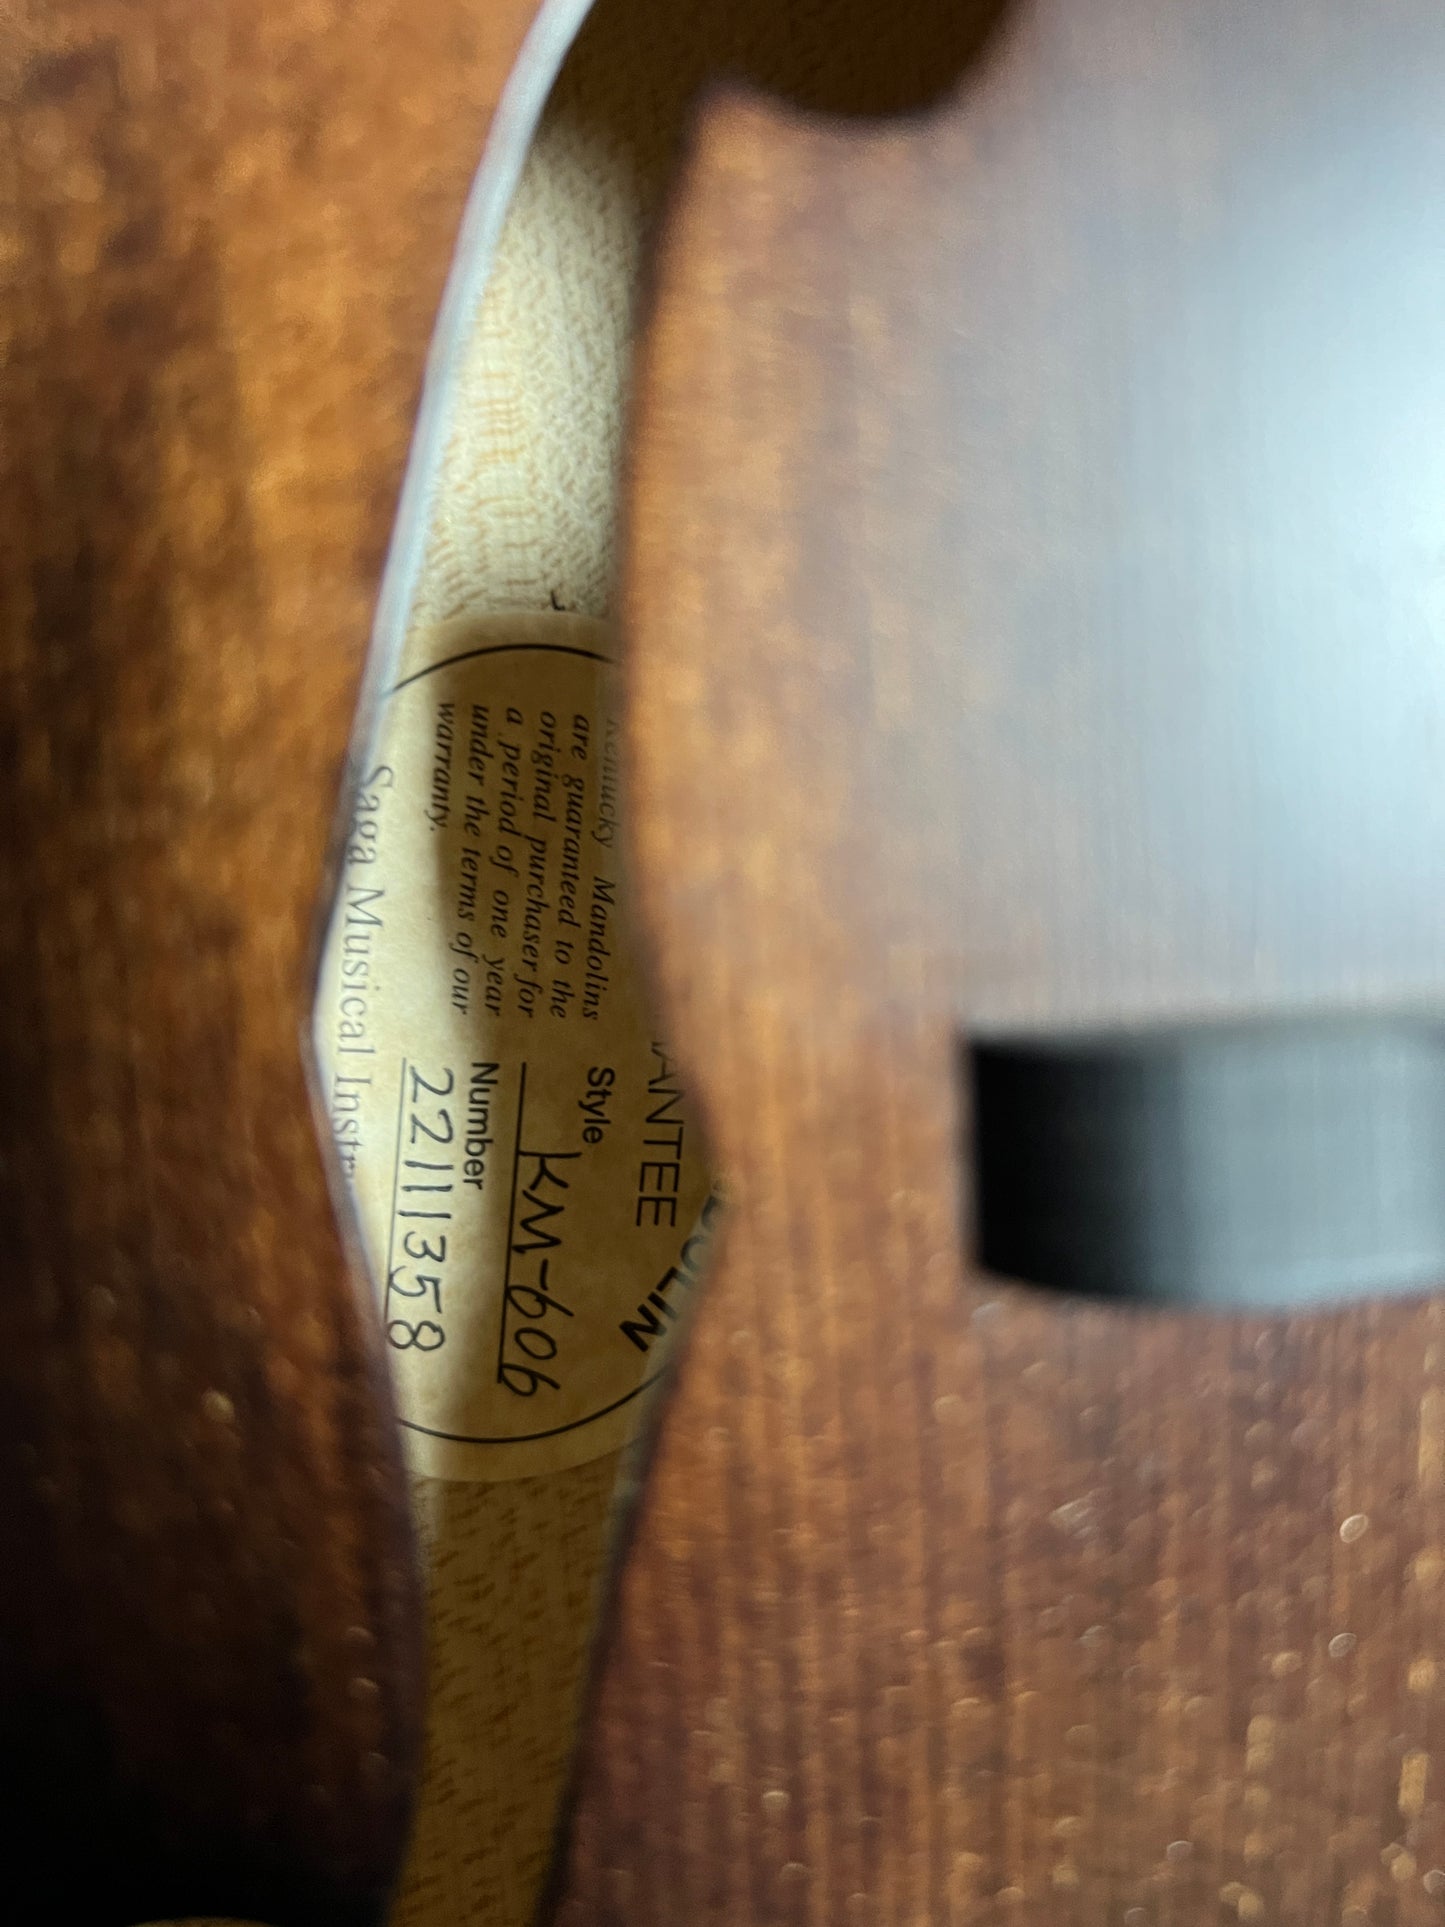 (SOLD) Kentucky KM-606 F-Style Mandolin Spruce/ Maple - New